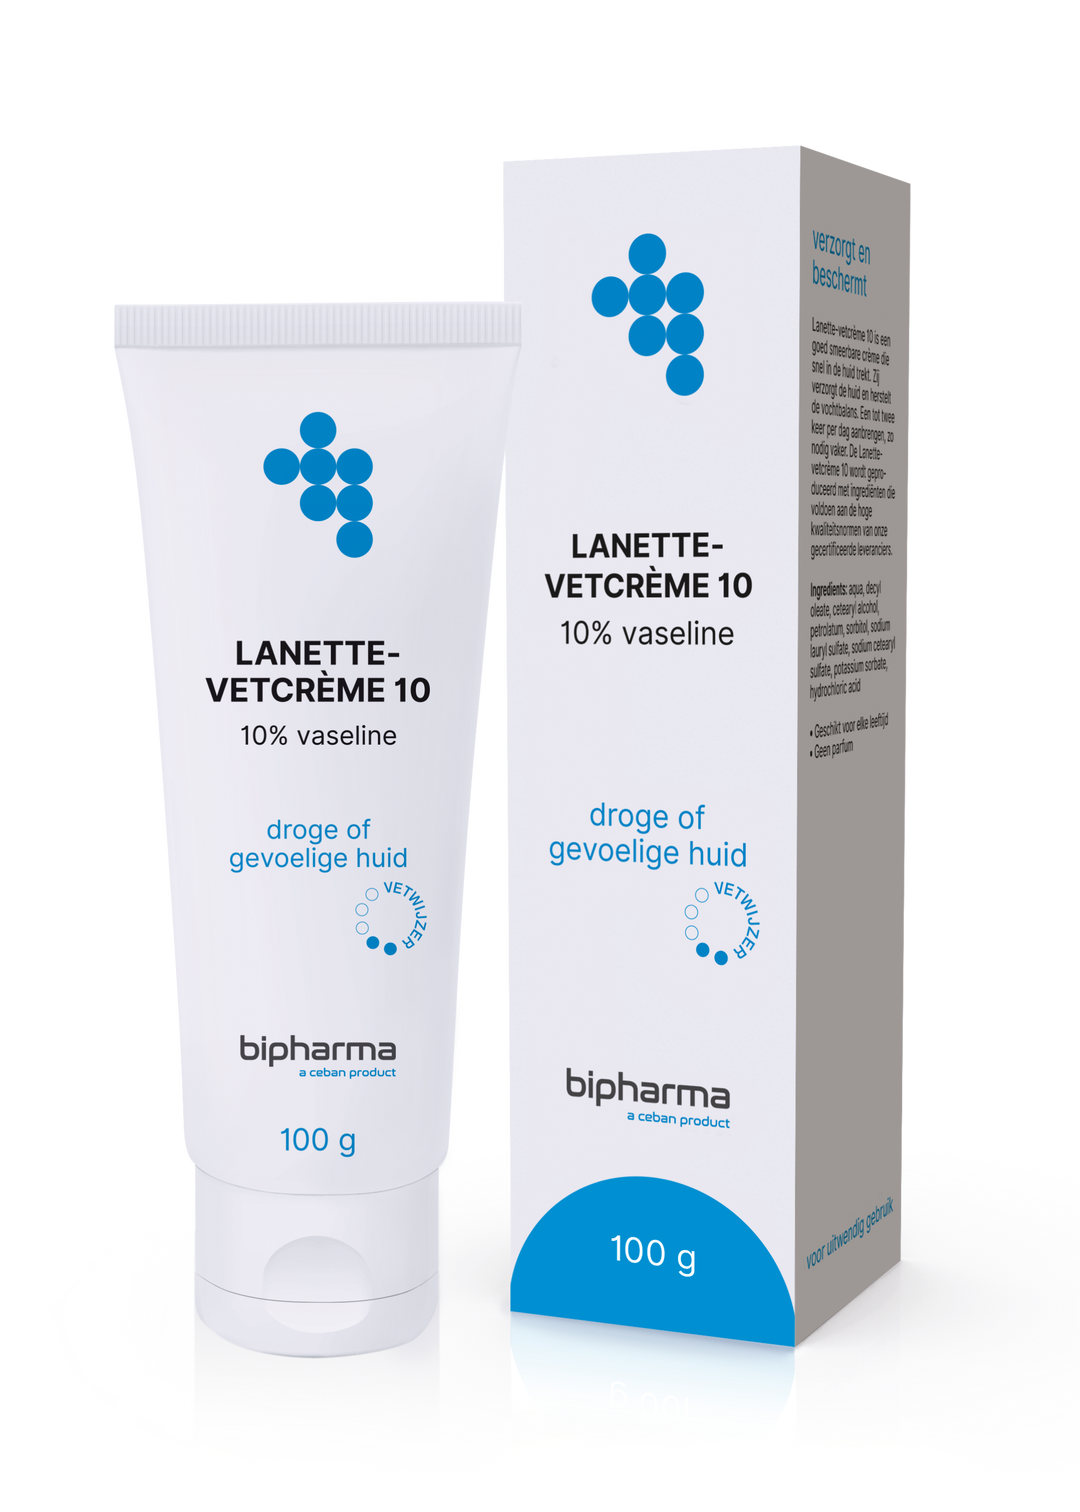 Bipharma Lanettecreme met 10% Vaseline - BIPHARMA BV - Huidproducten.nl